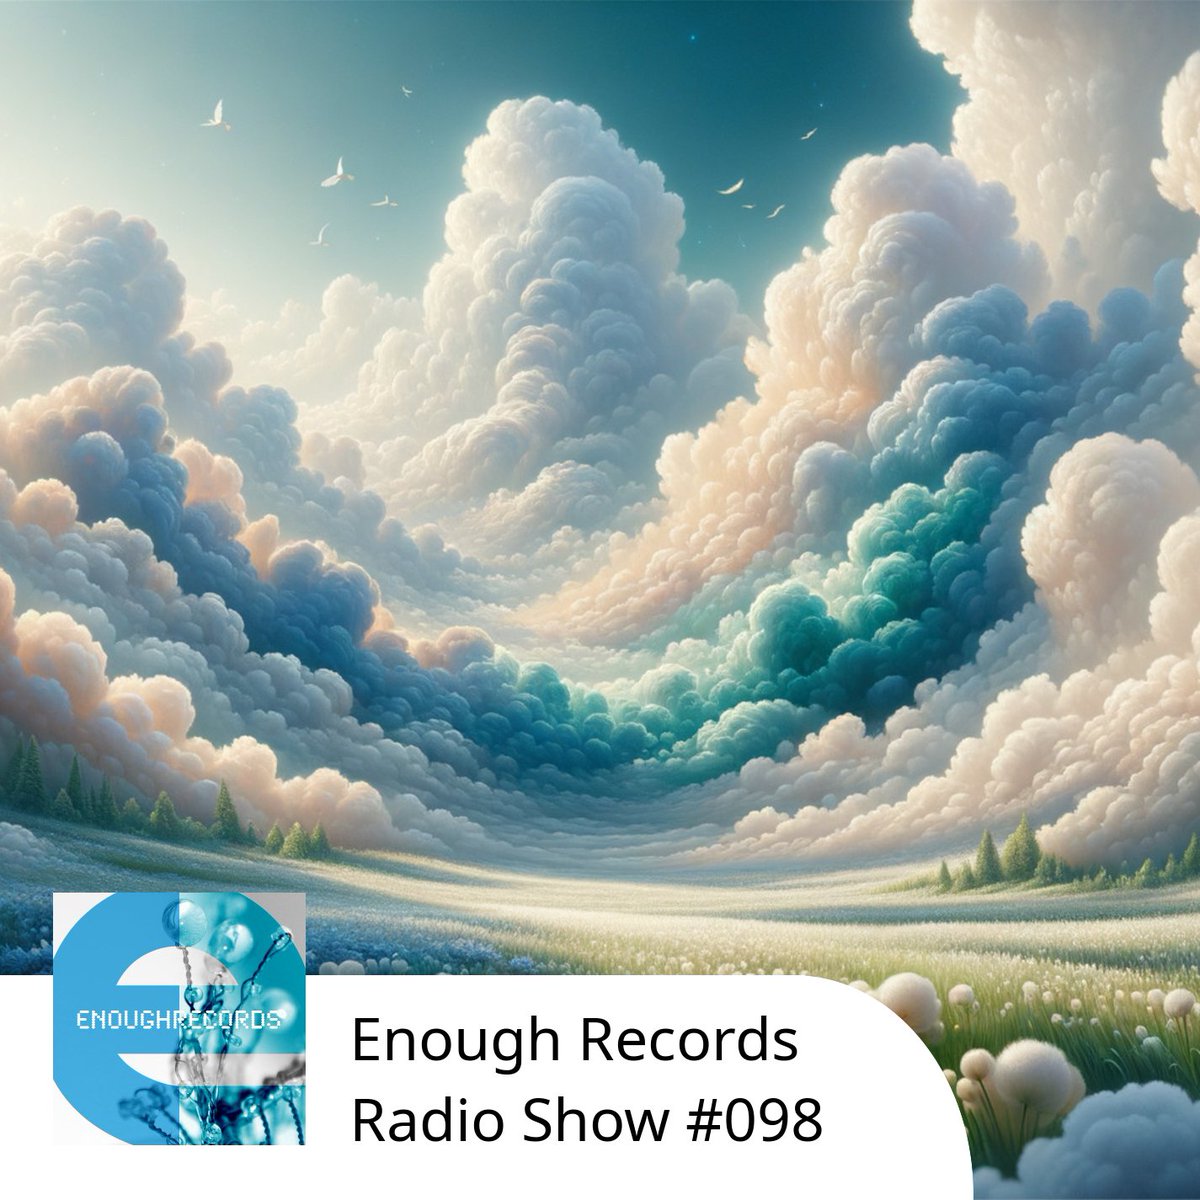 Enough Records Radio Show #098 mixcloud.com/enoughrecords/… #podcast #radioshow #ambient #ccmusic #netlabel